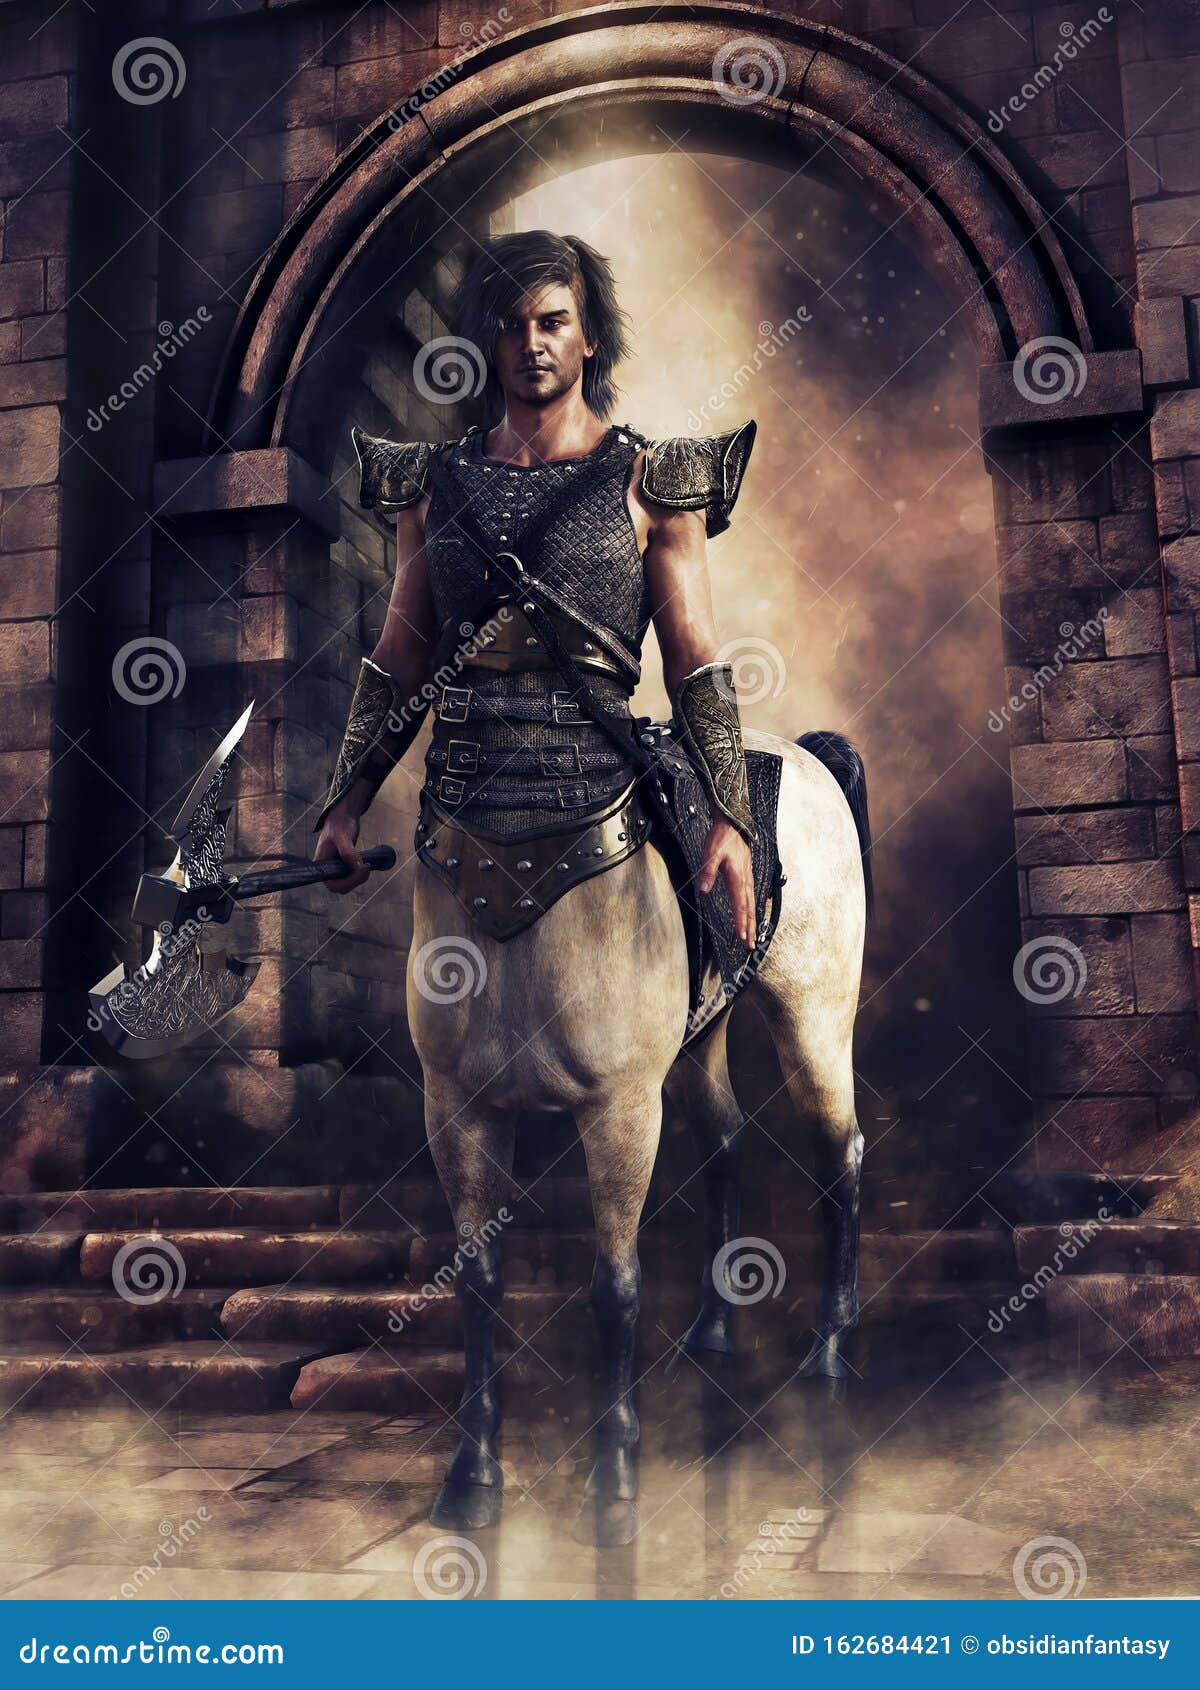 centaur warrior in front of a castle gate